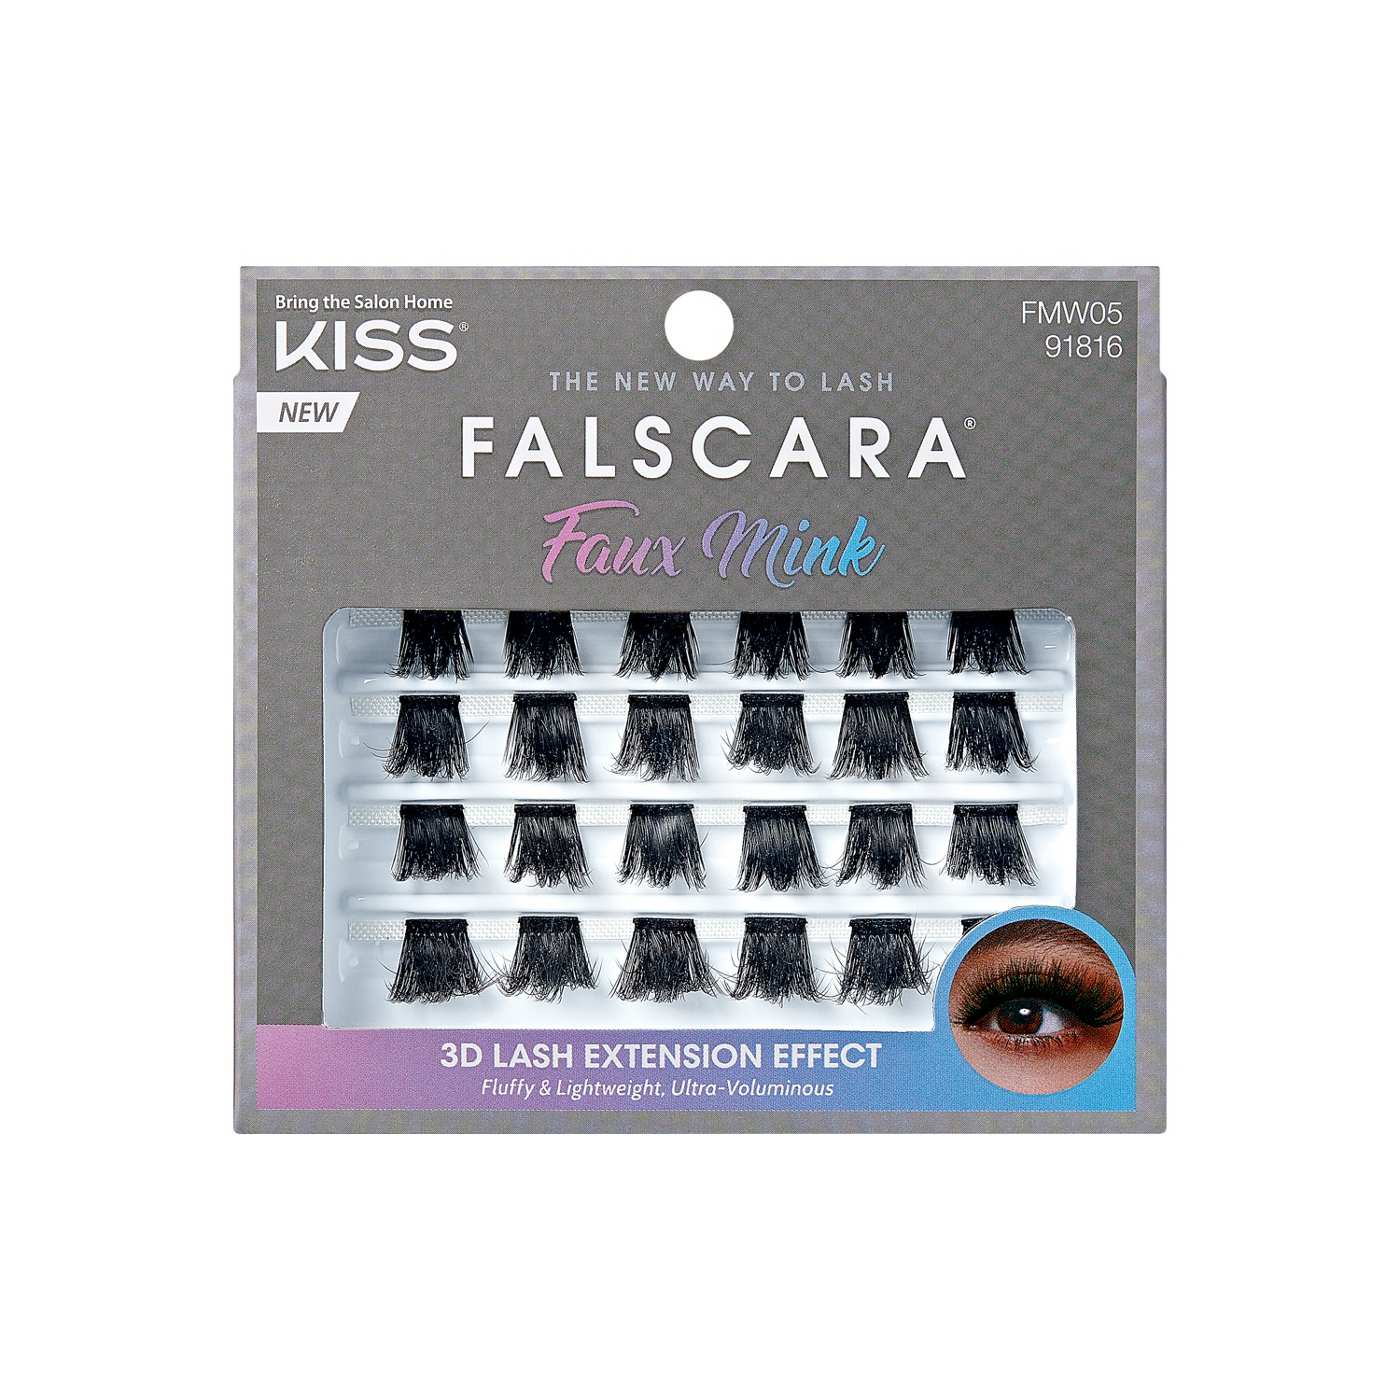 KISS Falscara Faux Mink Multipack; image 1 of 6